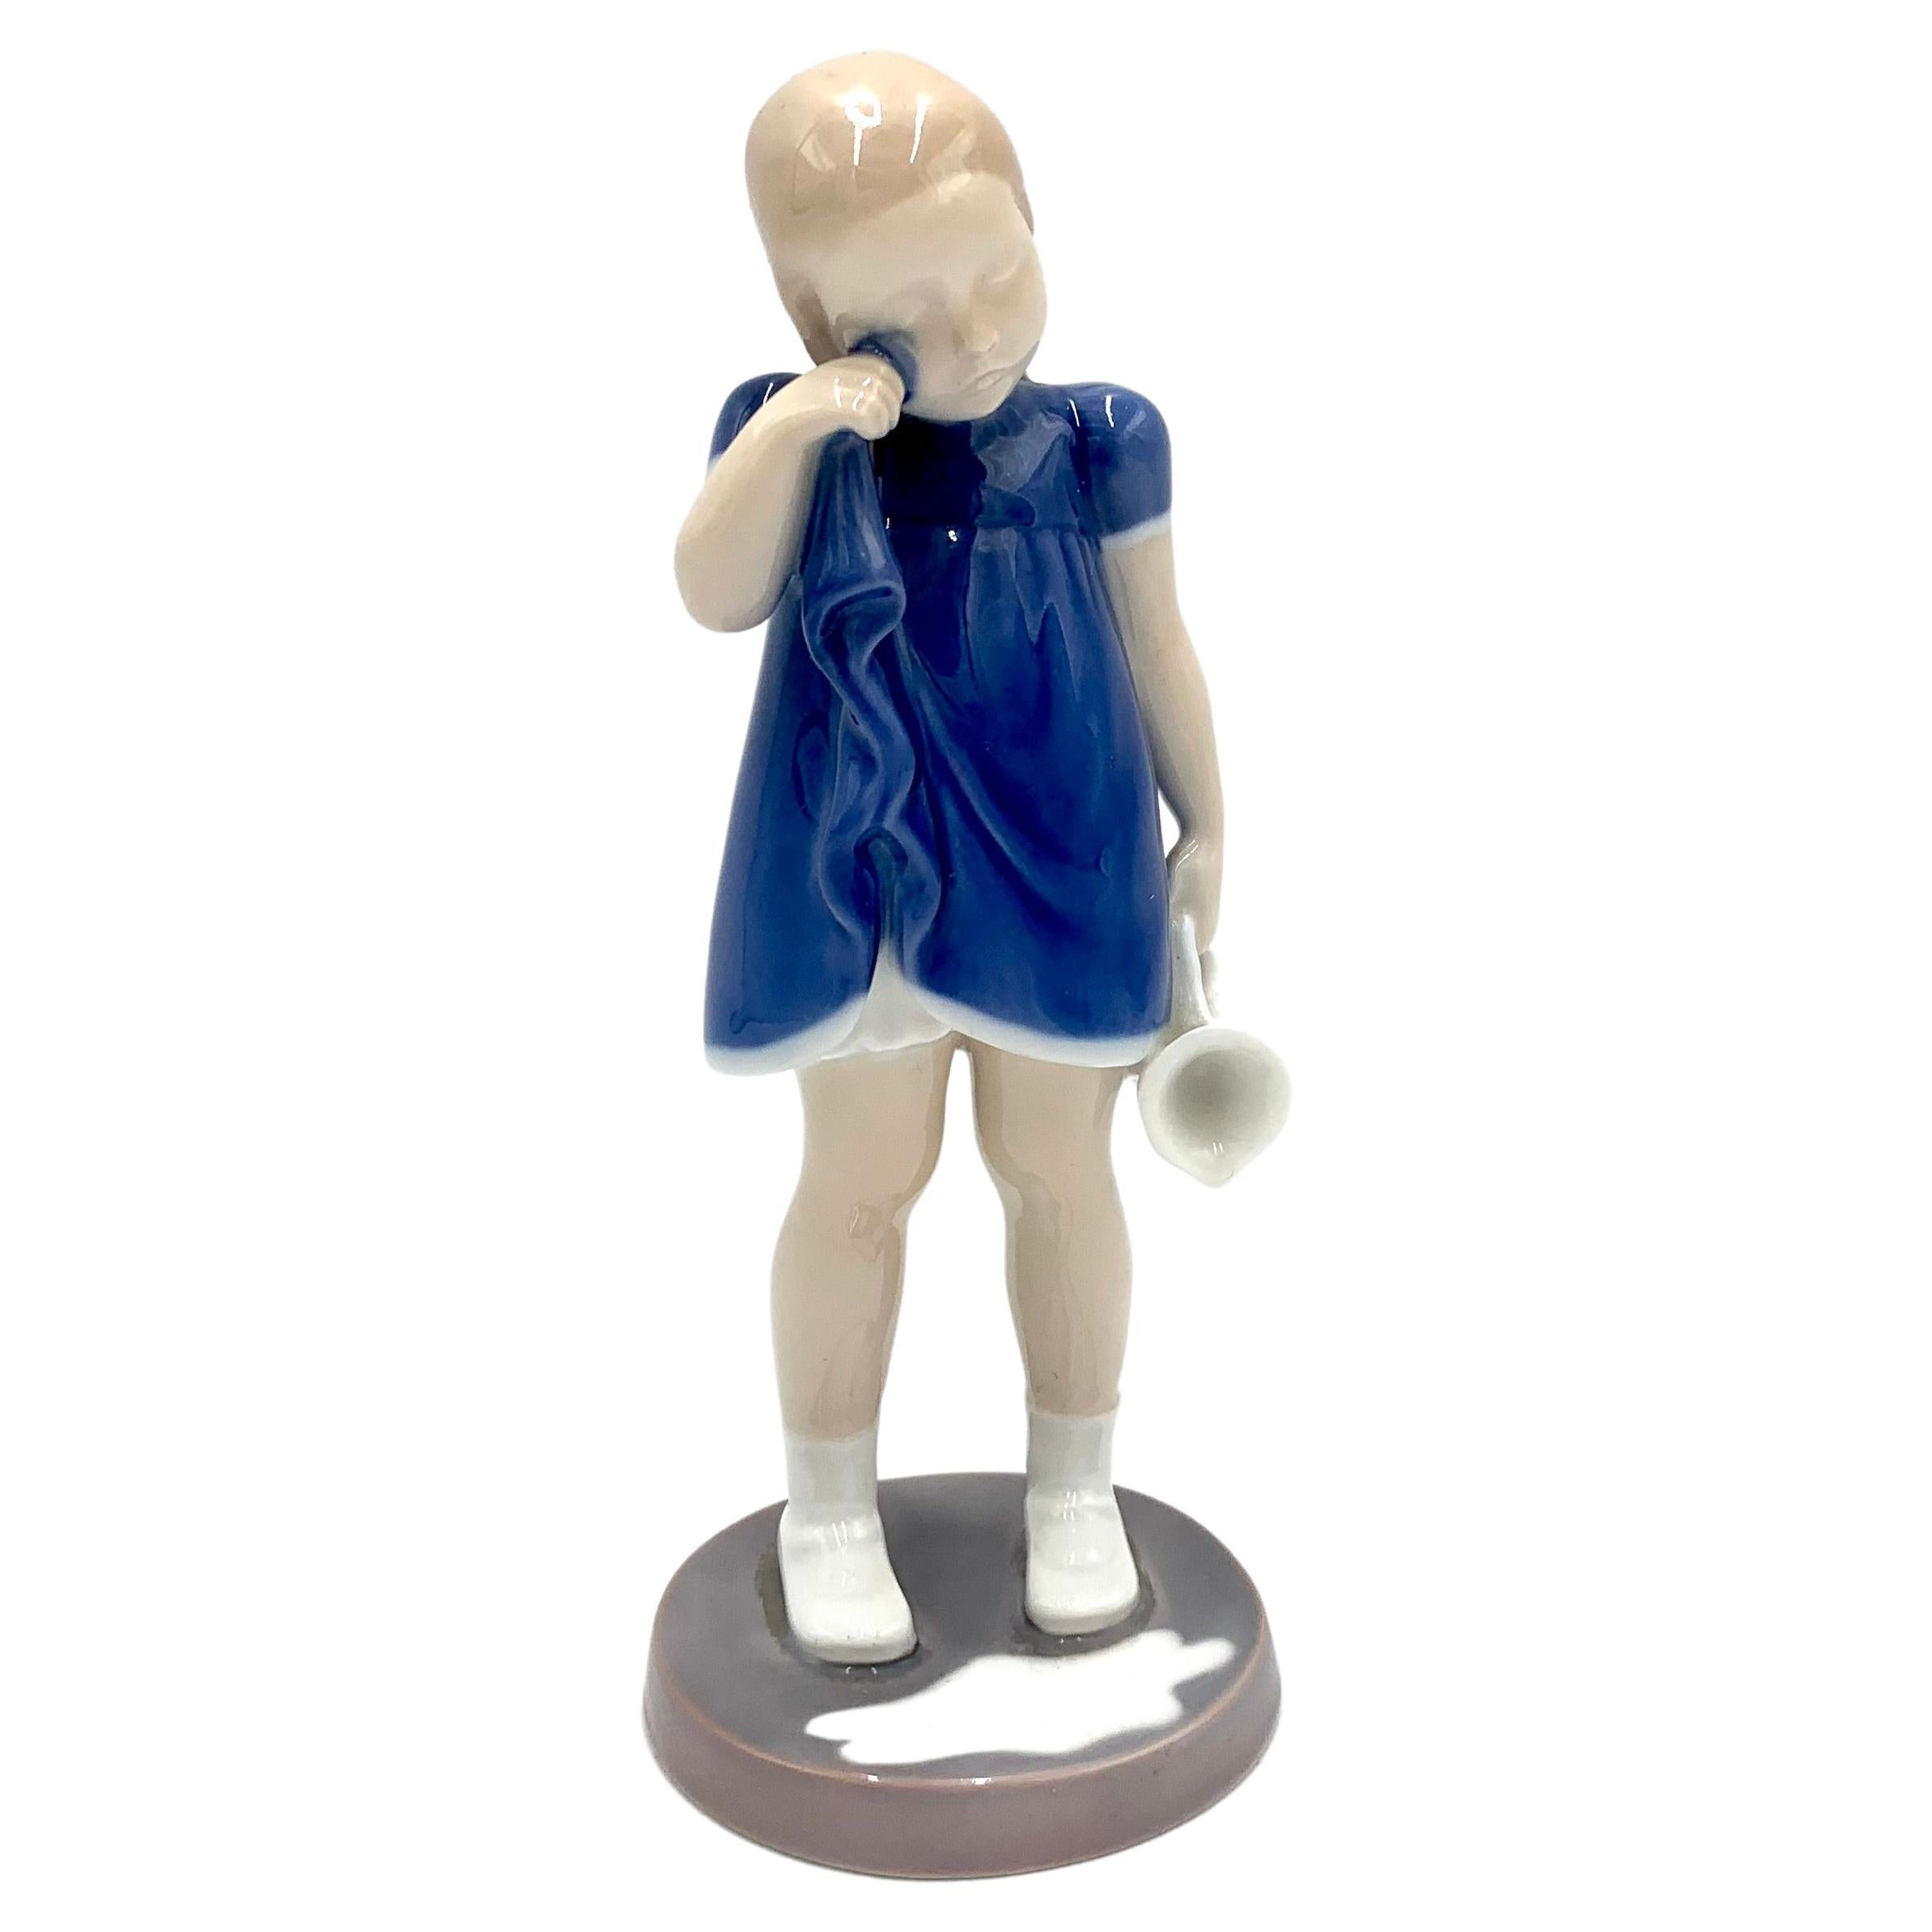 Porcelain Figurine of a Crying Girl, Bing & Grondahl, Denmark, 1950s / 1960s